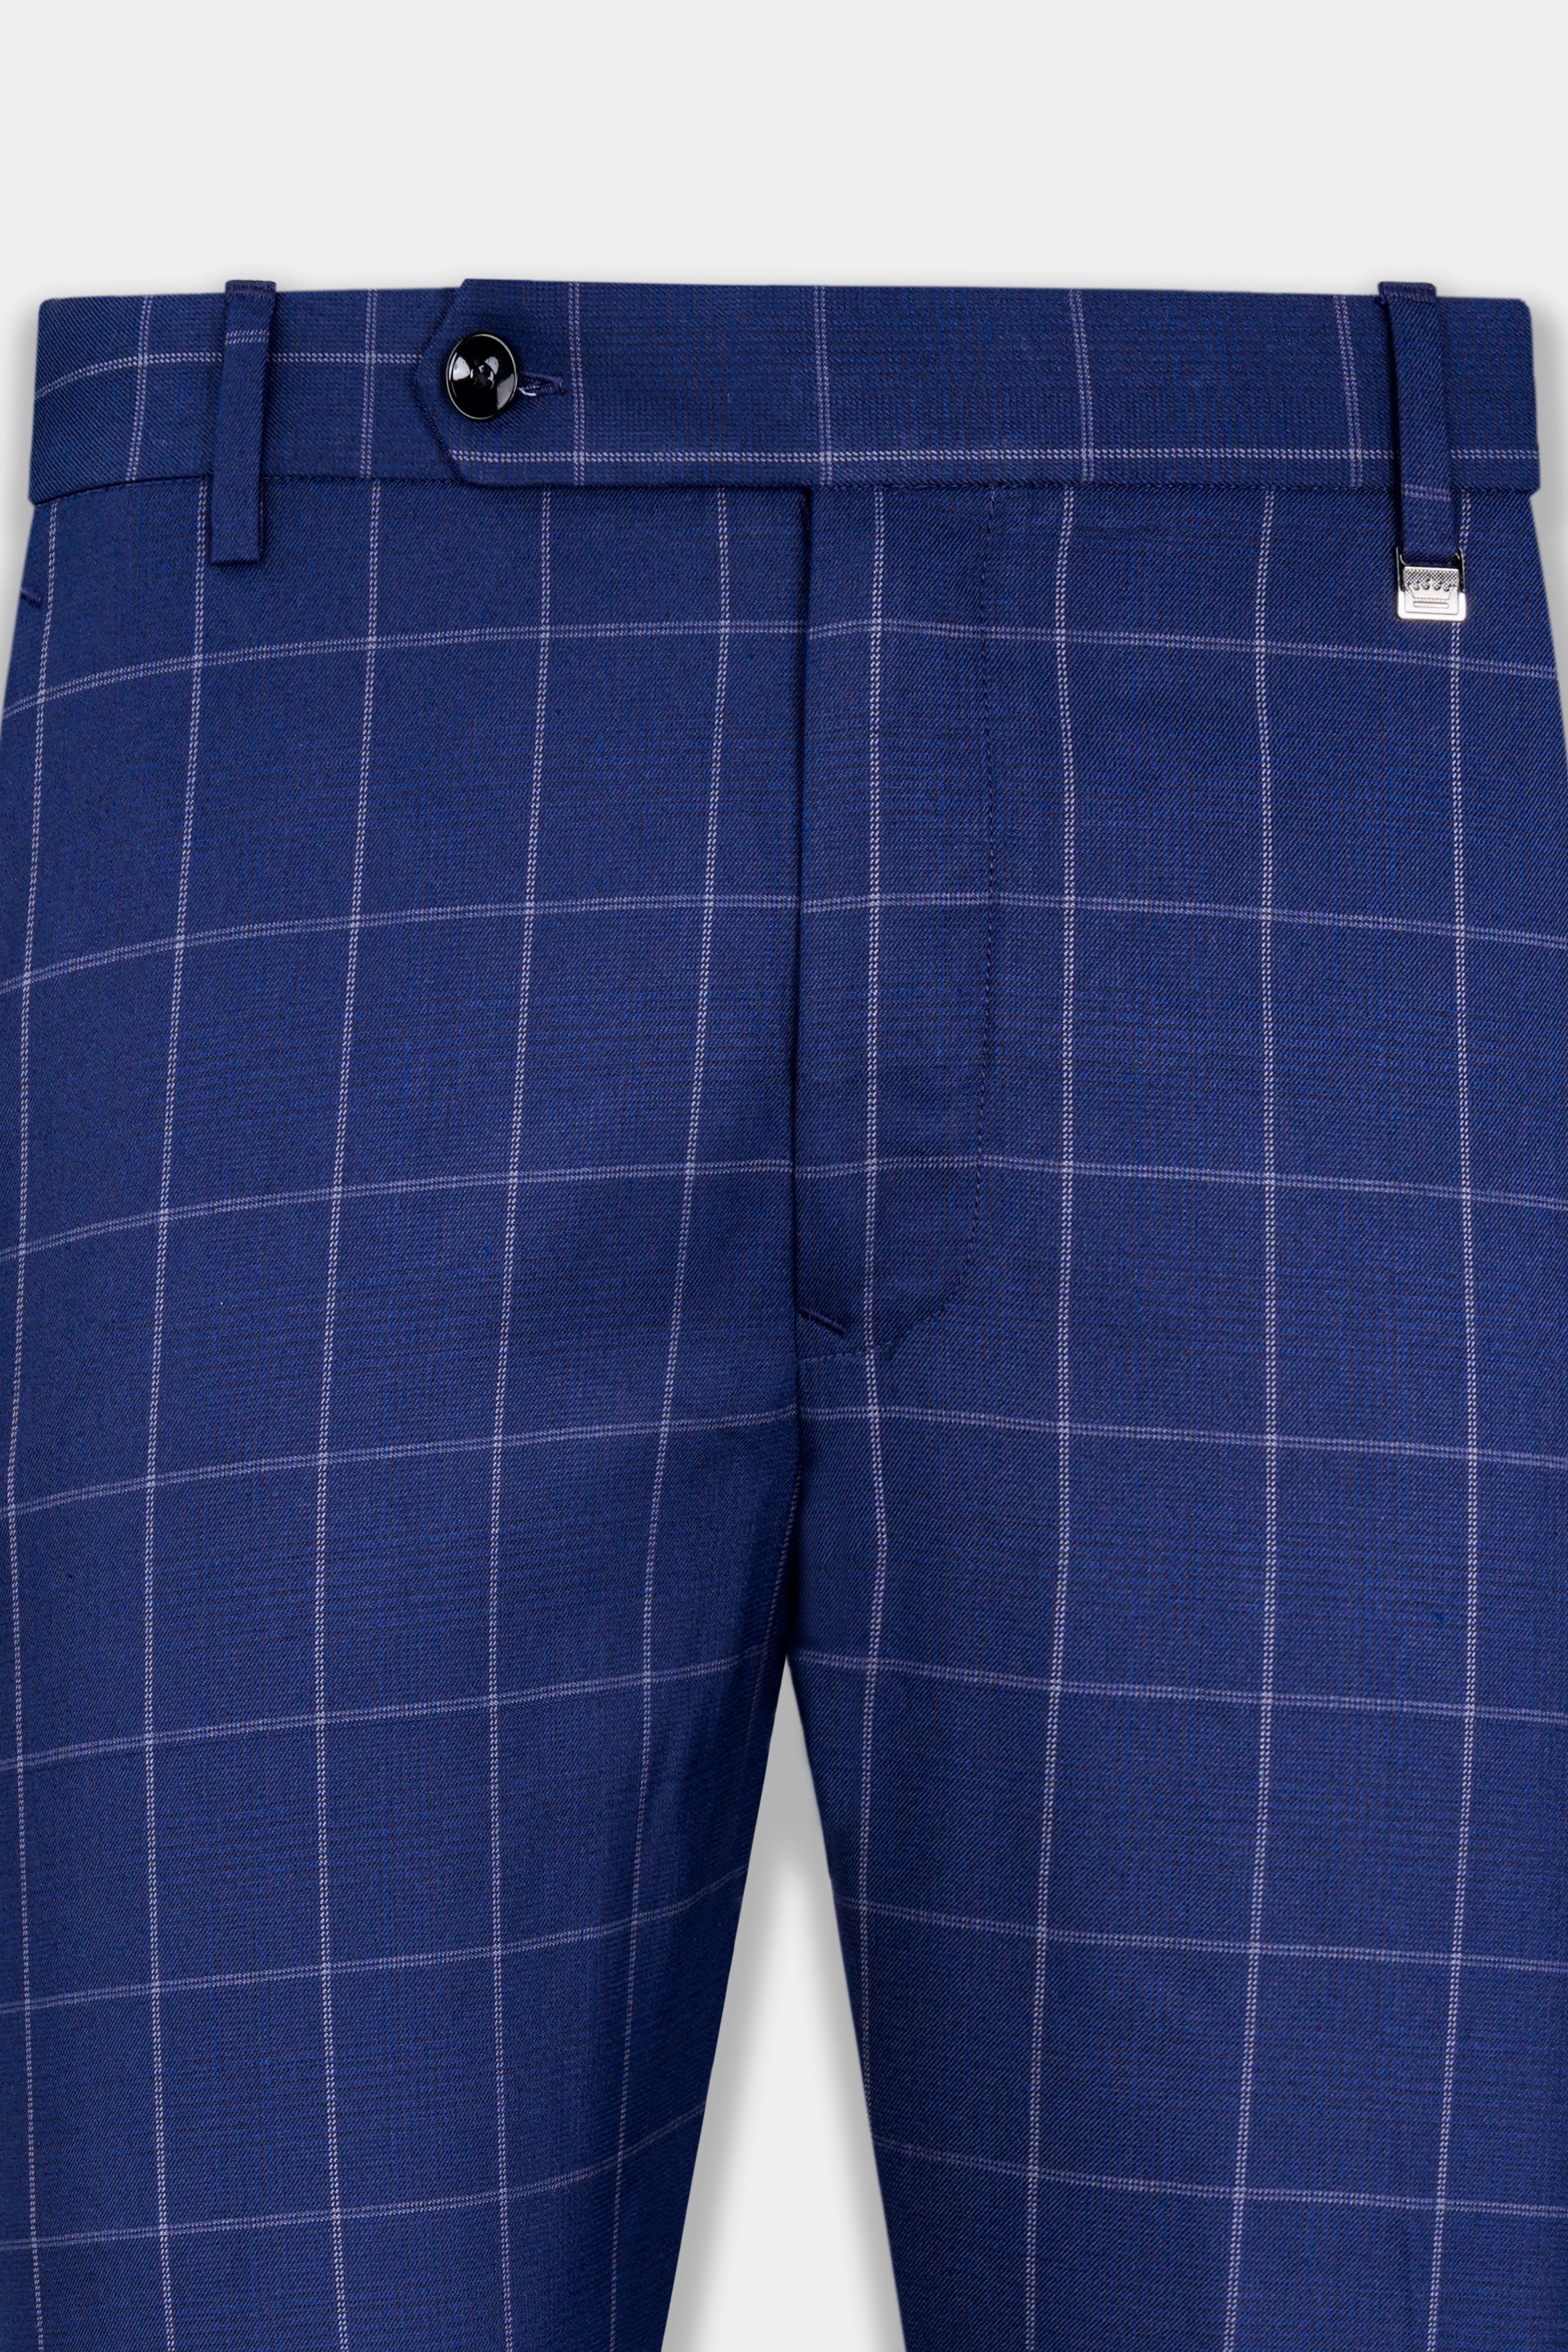 Buy Navy Windowpane Check Trousers 32S | Trousers | Argos